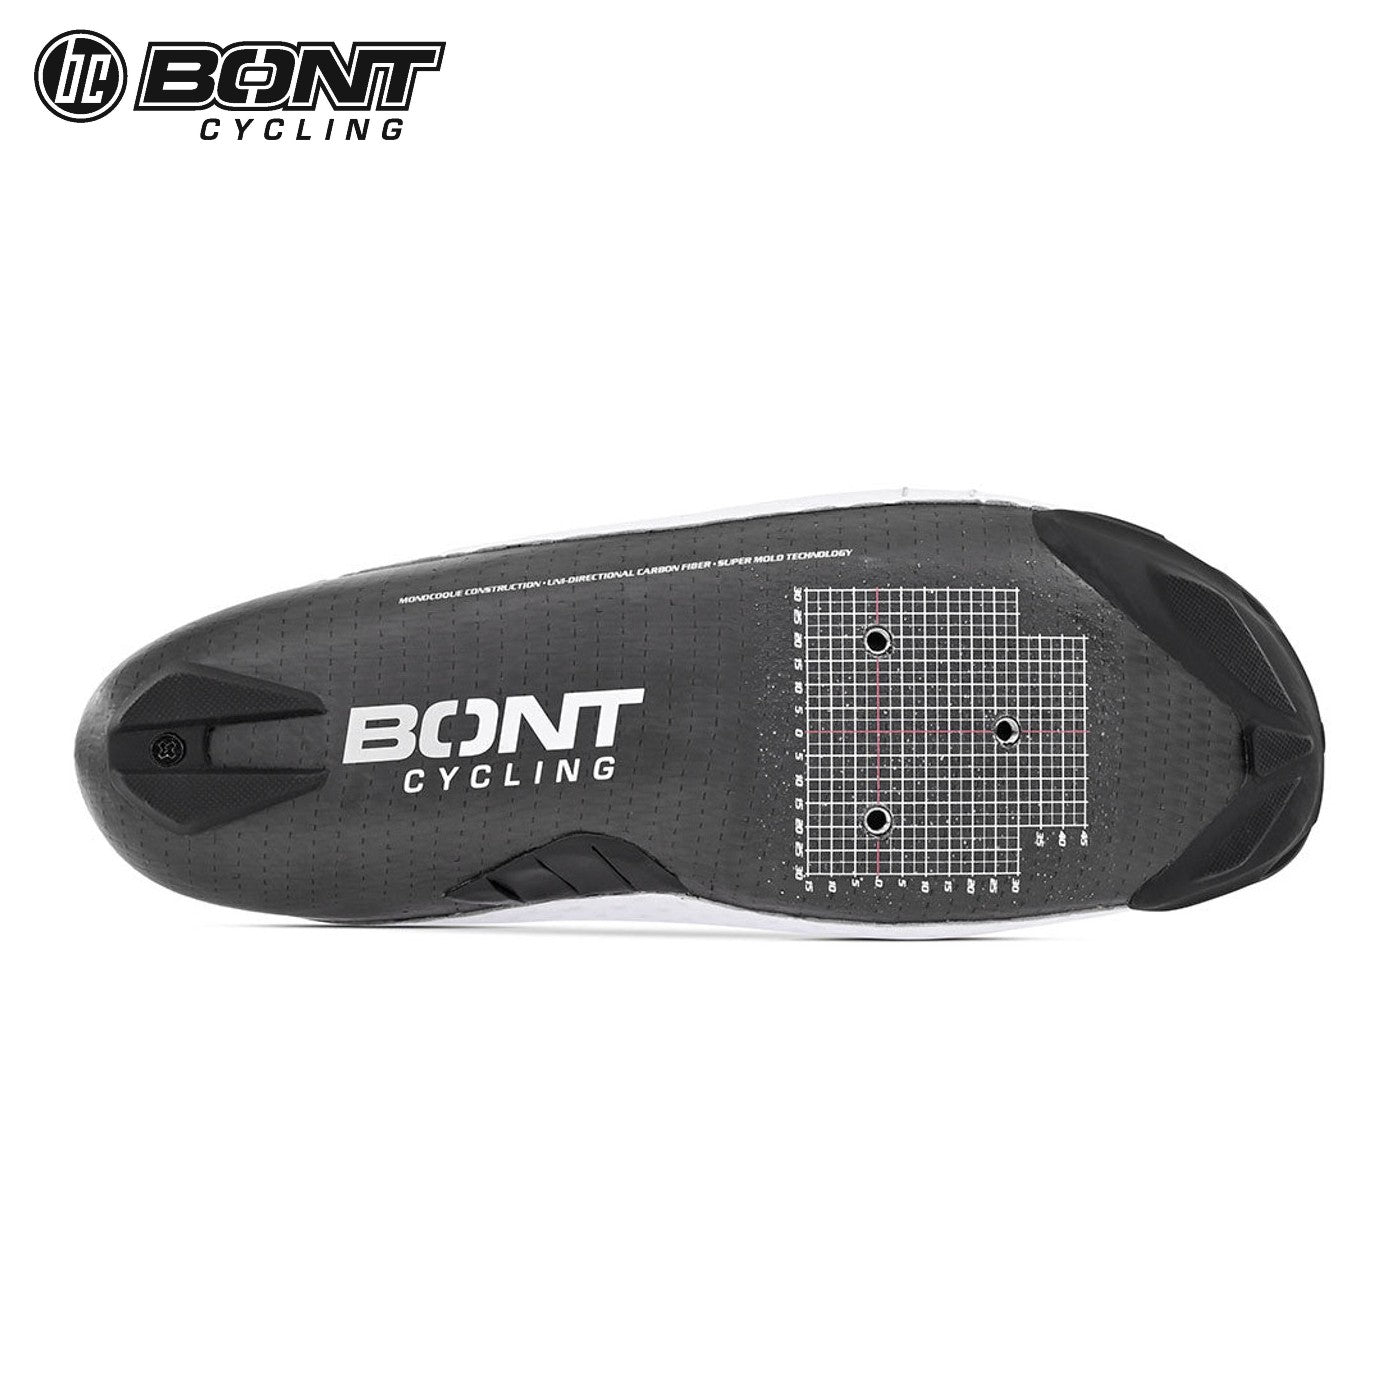 Bont Vaypor S LI2 Carbon Composite / BOA Cycling Shoes - White LI2